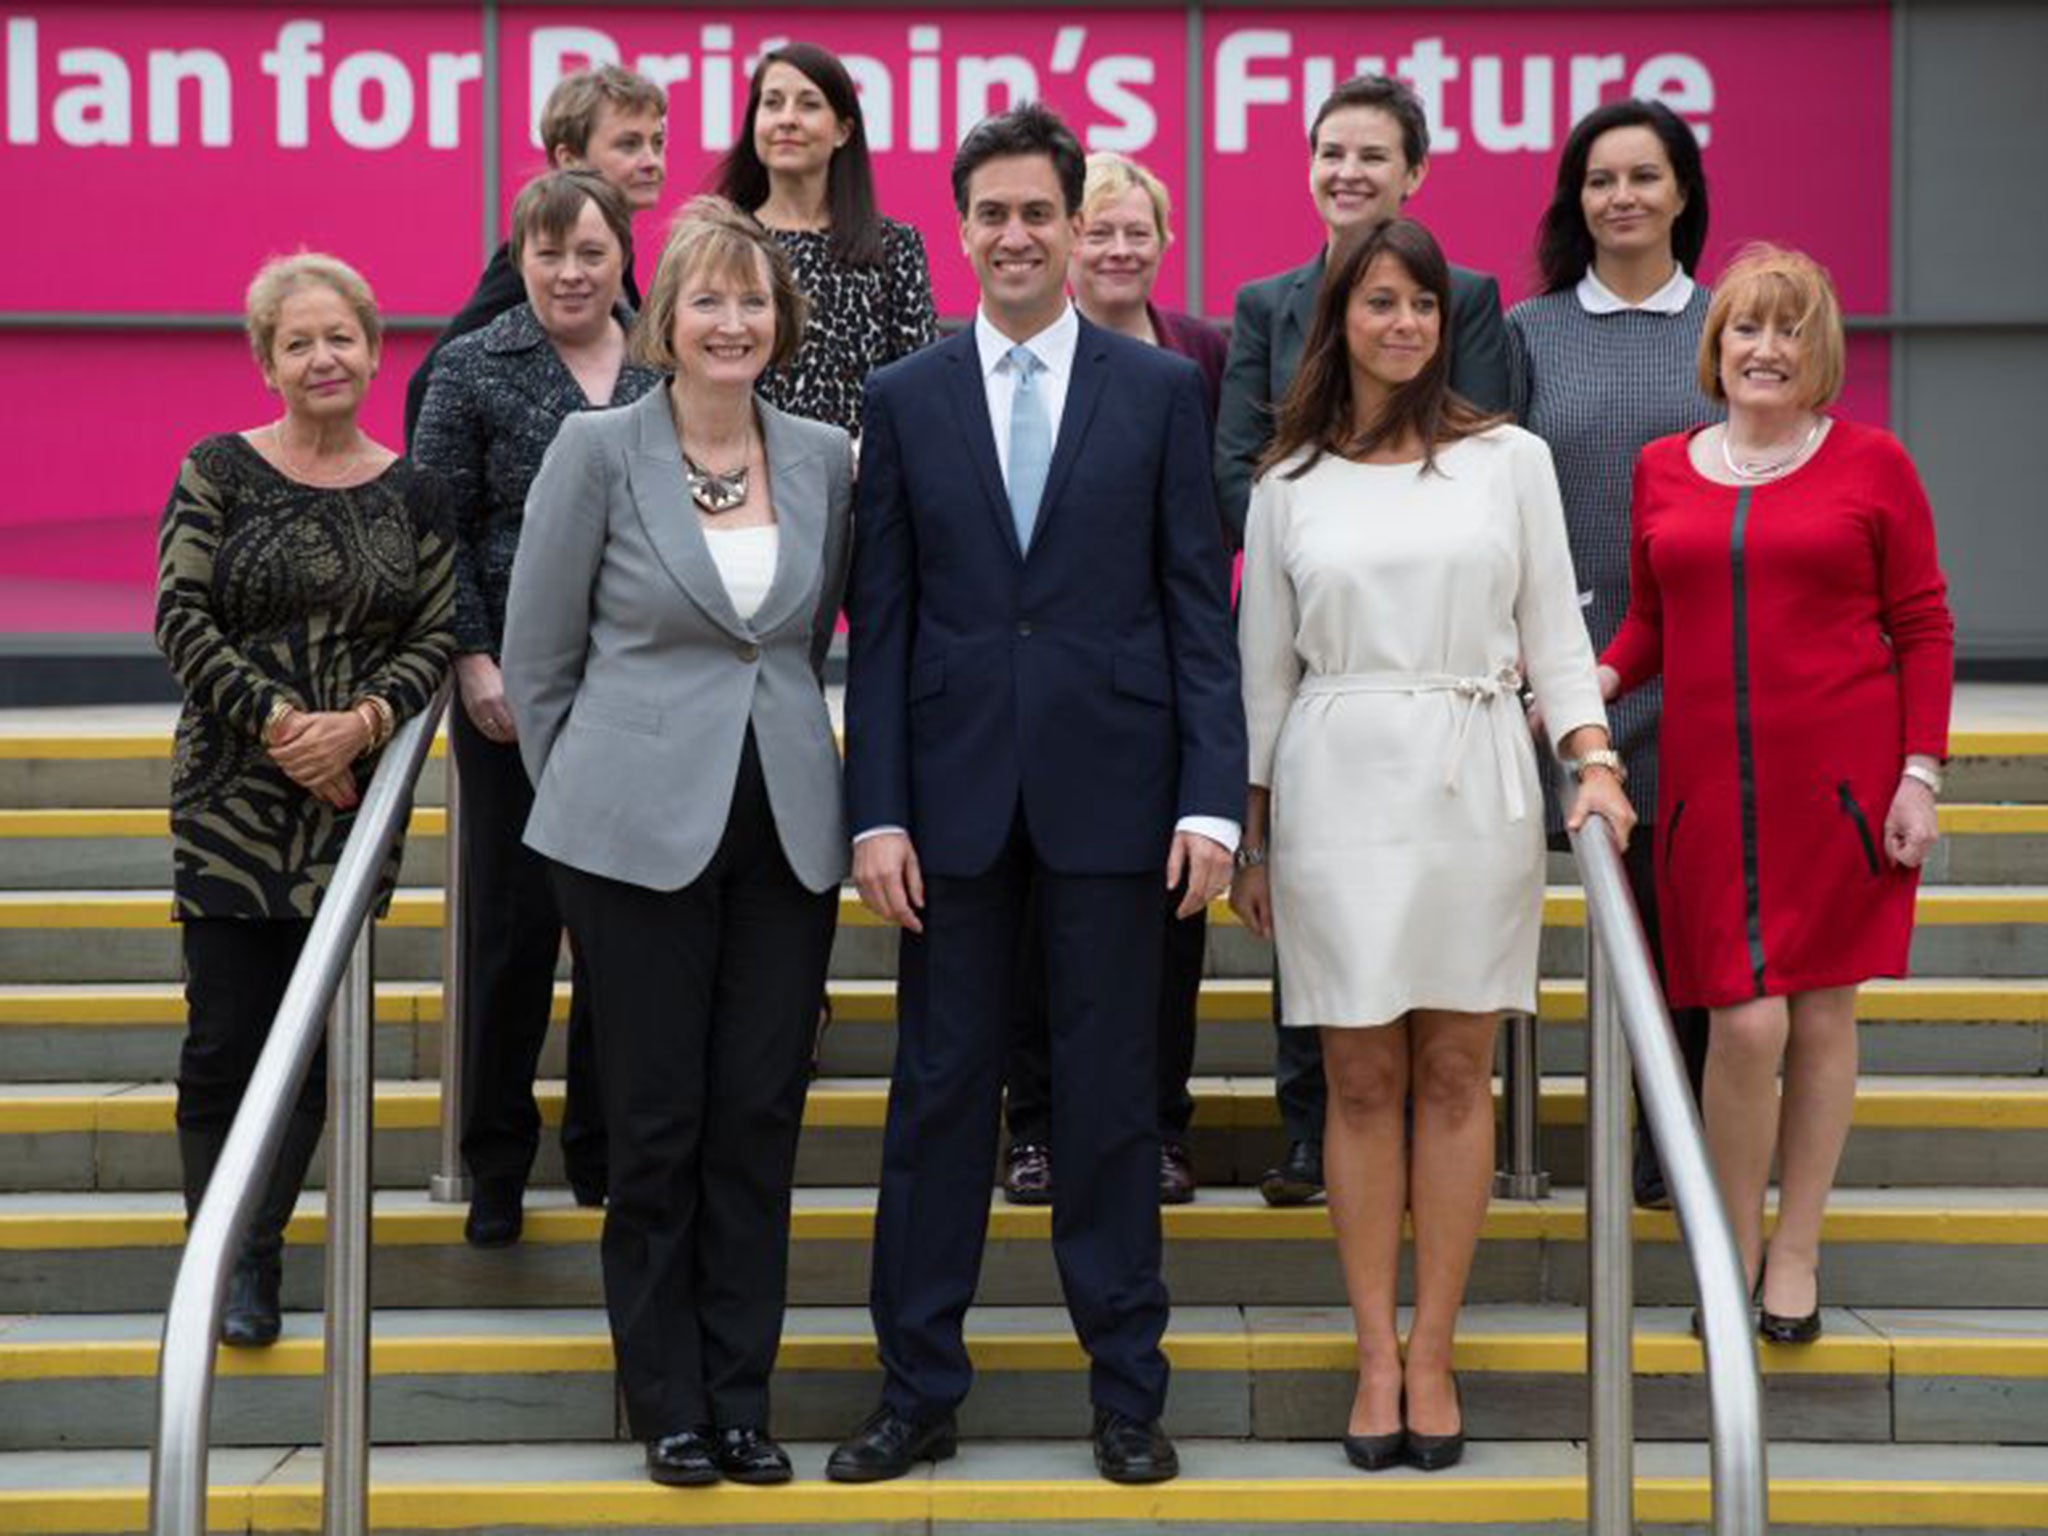 Labour leader Ed Miliband and MPs including Gloria De Piero, in white